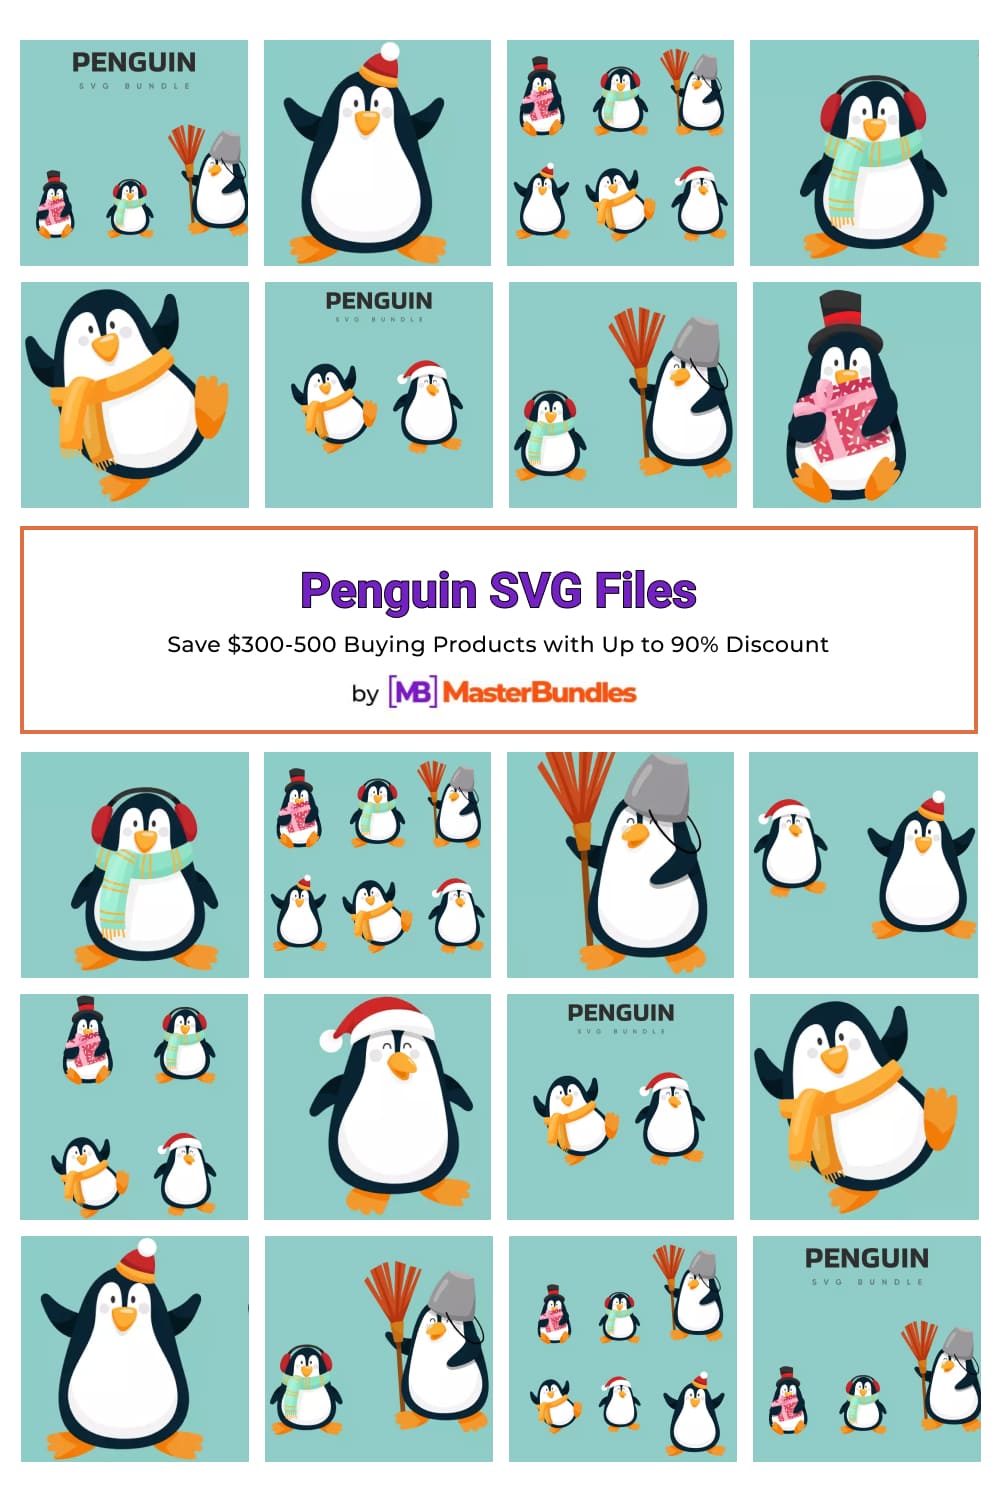 Penguin SVG Files Pinterest image.